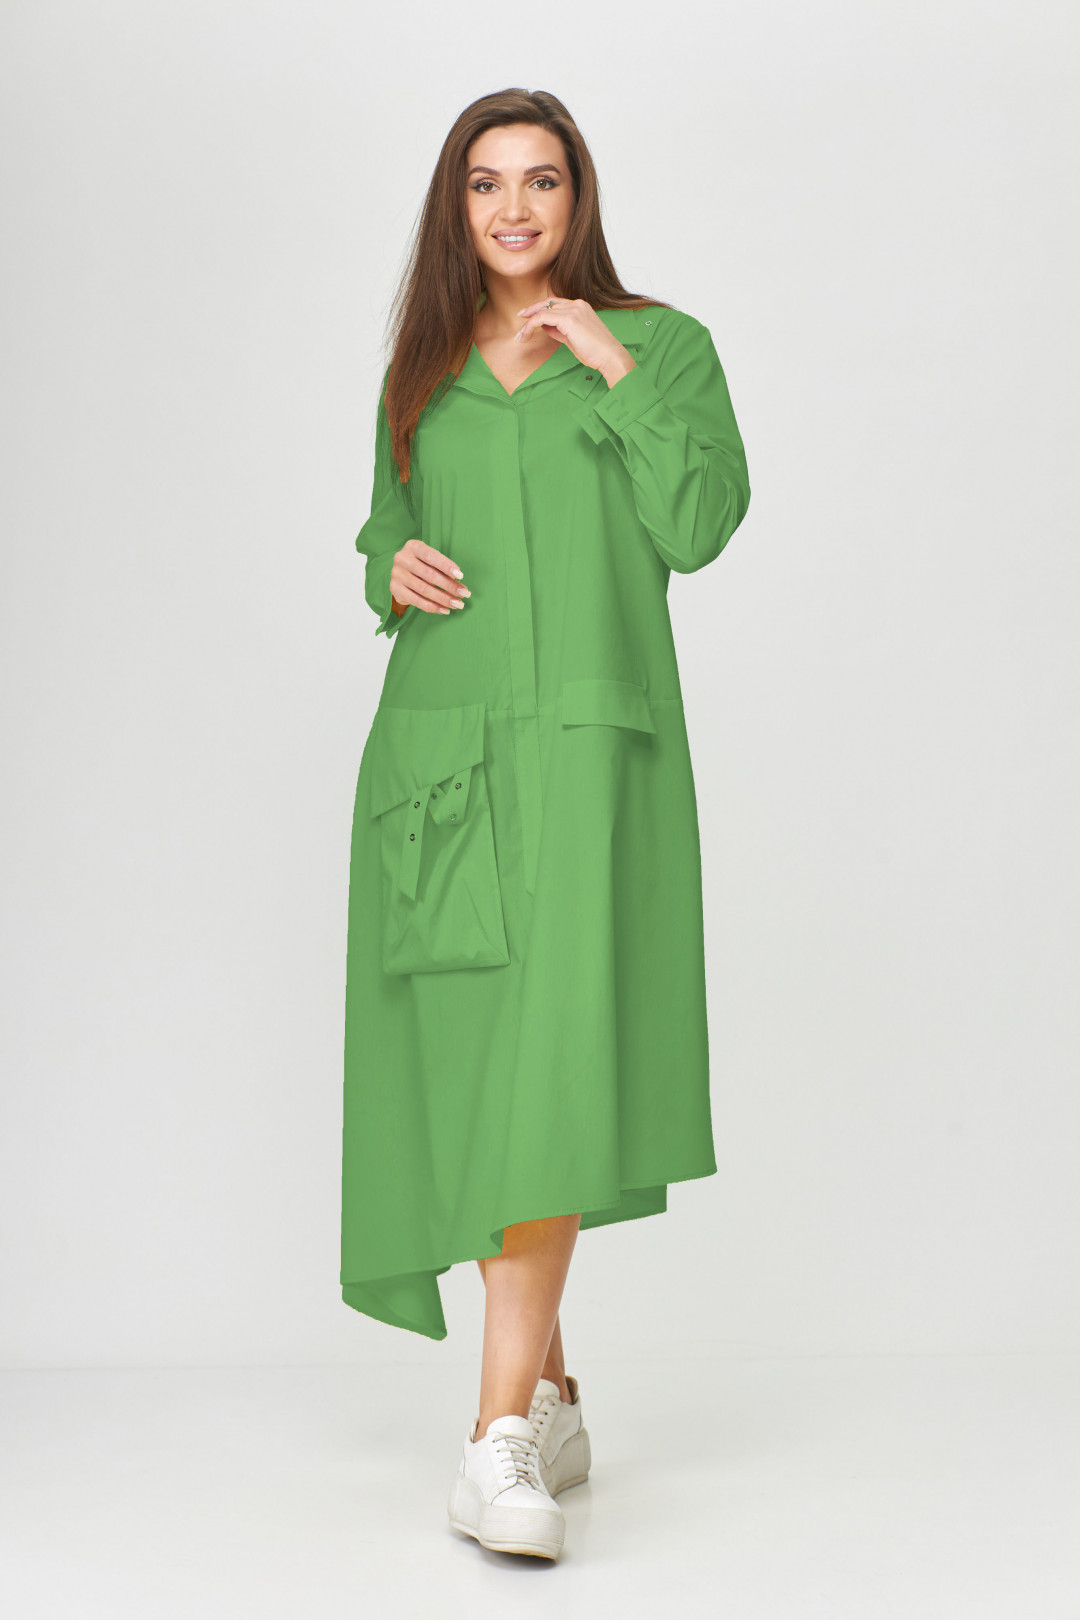 Платье Abbi style 1009 зеленый